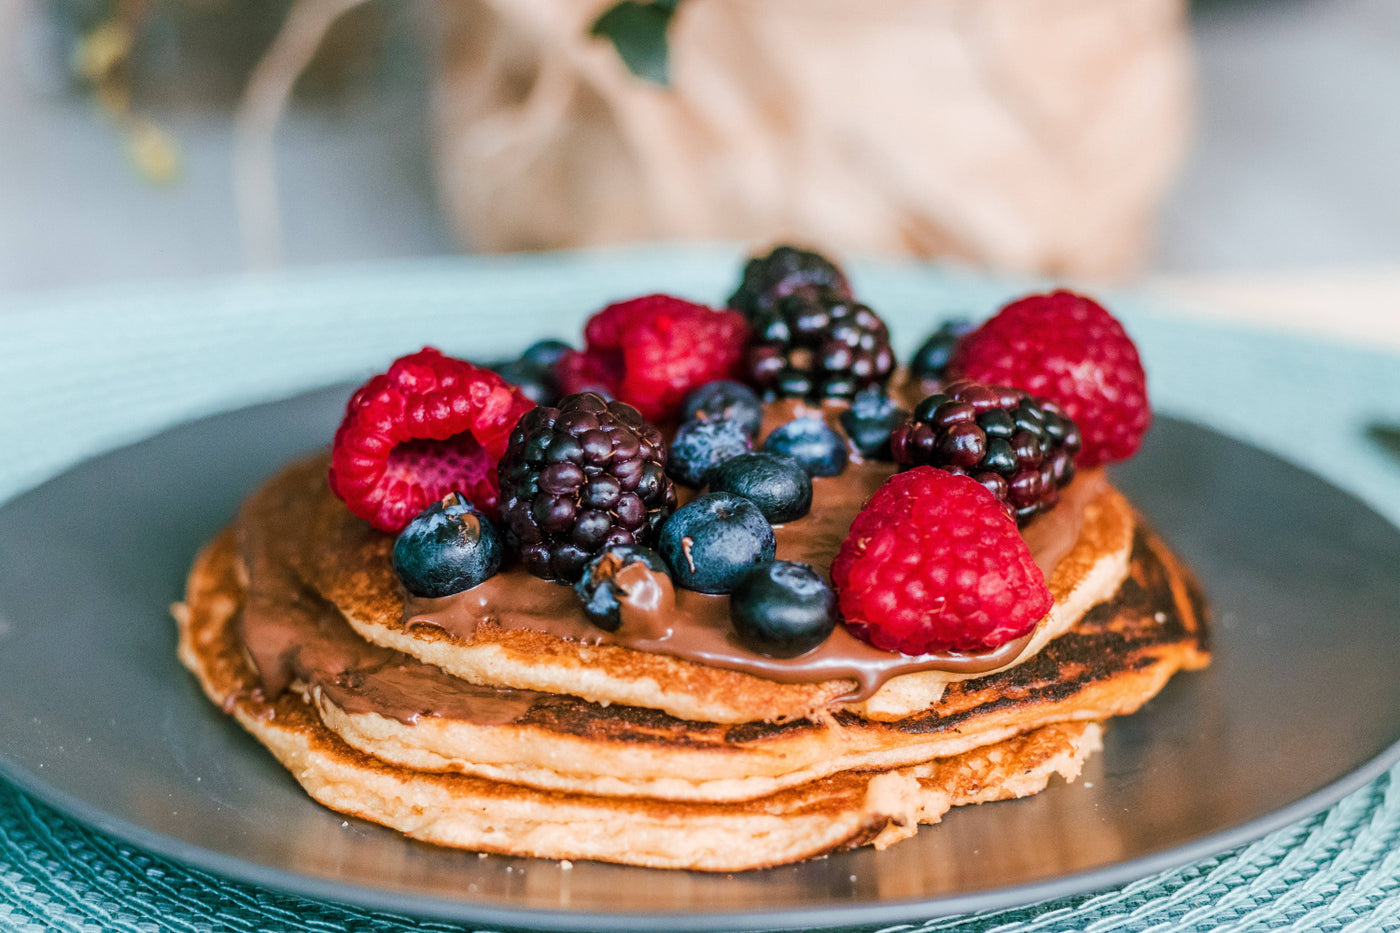 Top 5 Healthy Pancake Toppings